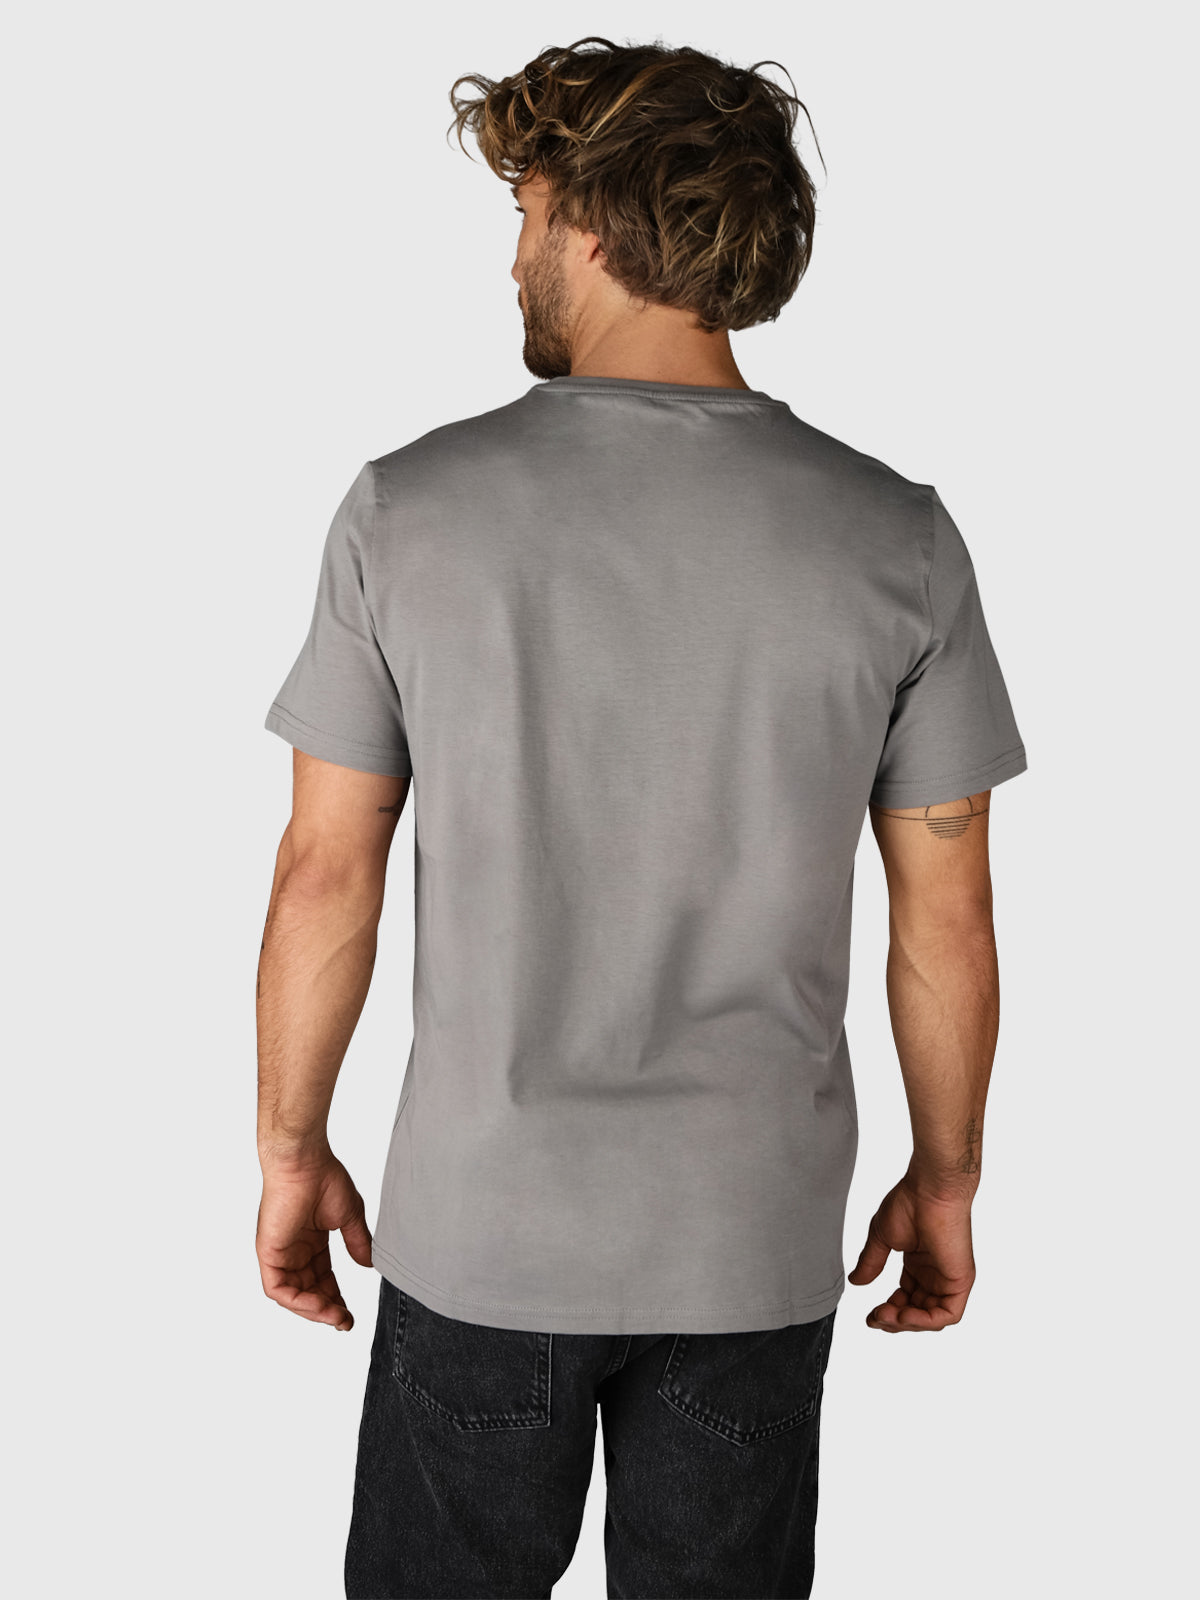 Milon-Logo-R Herren T-shirt | Grau